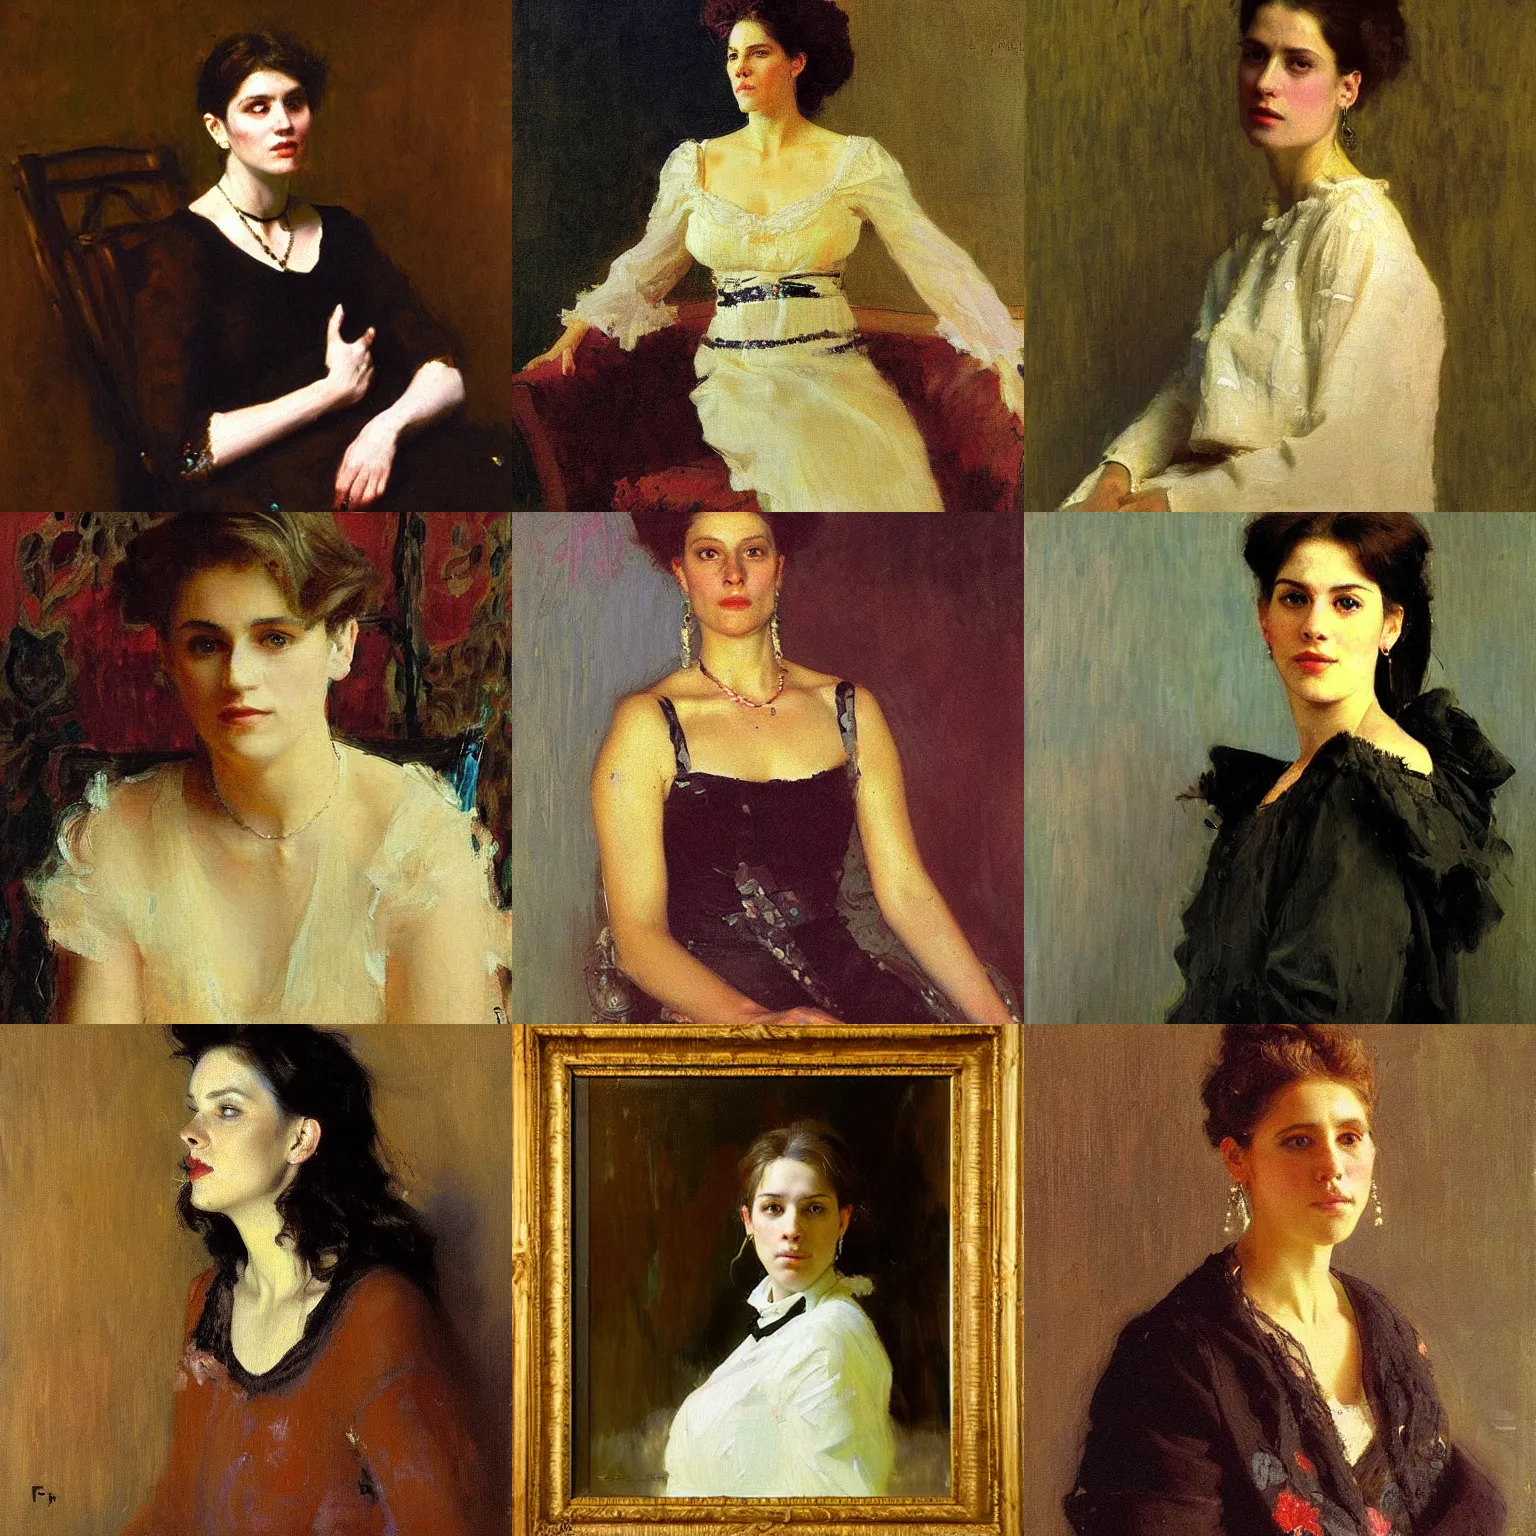 Prompt: a portrait painting of Jena Friedman by ilya repin